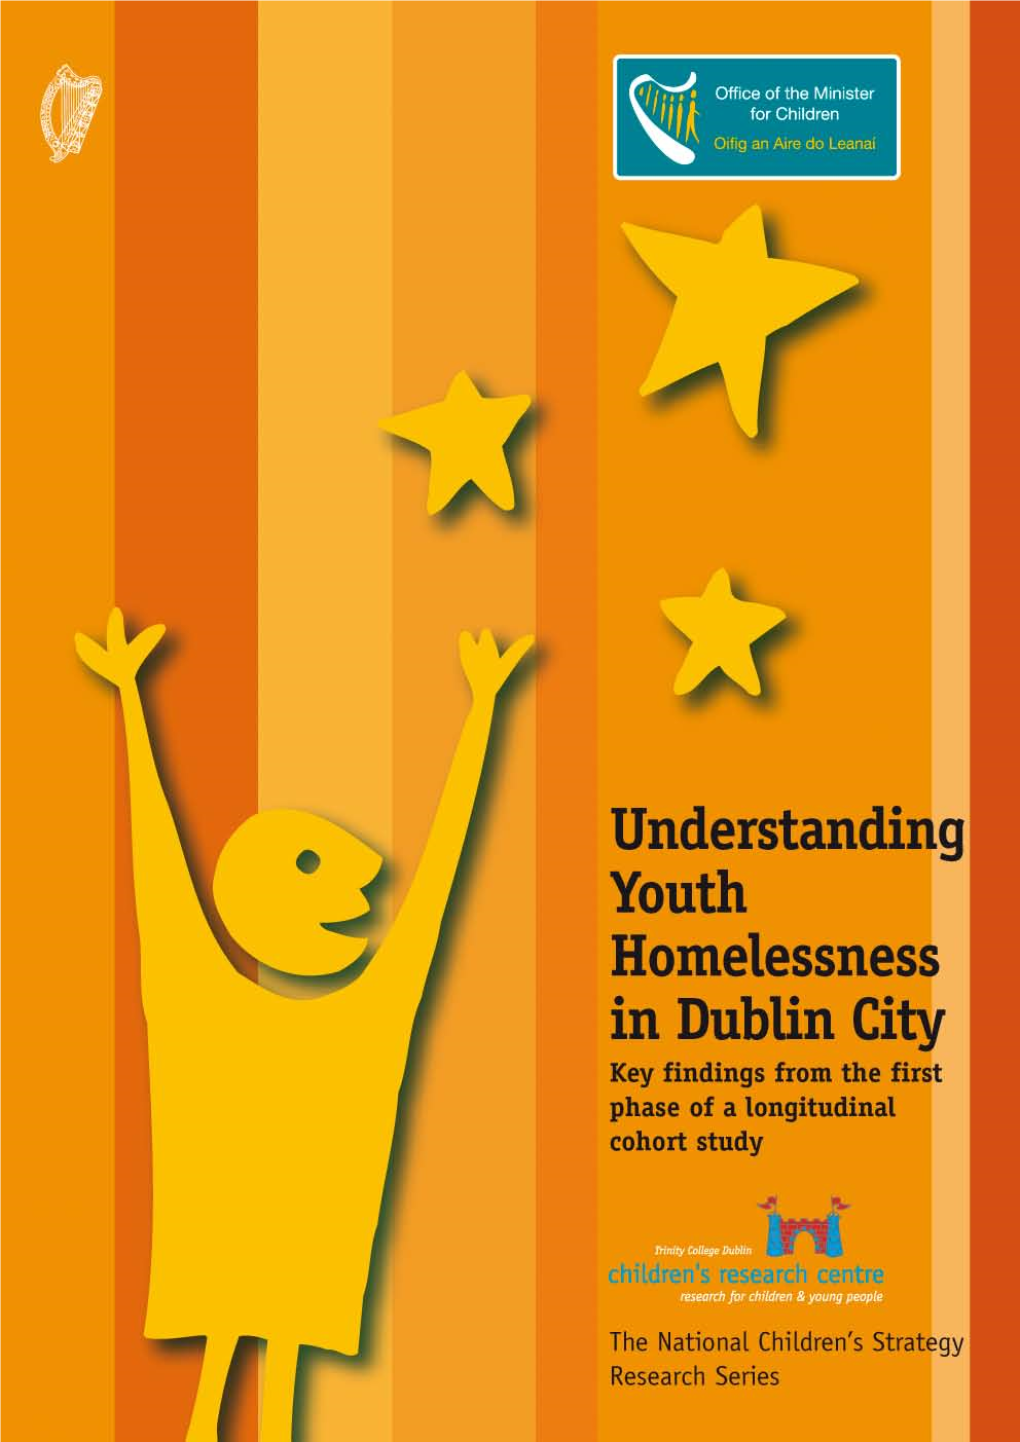 PDF (Understanding Youth Homelessness in Dublin City. Key